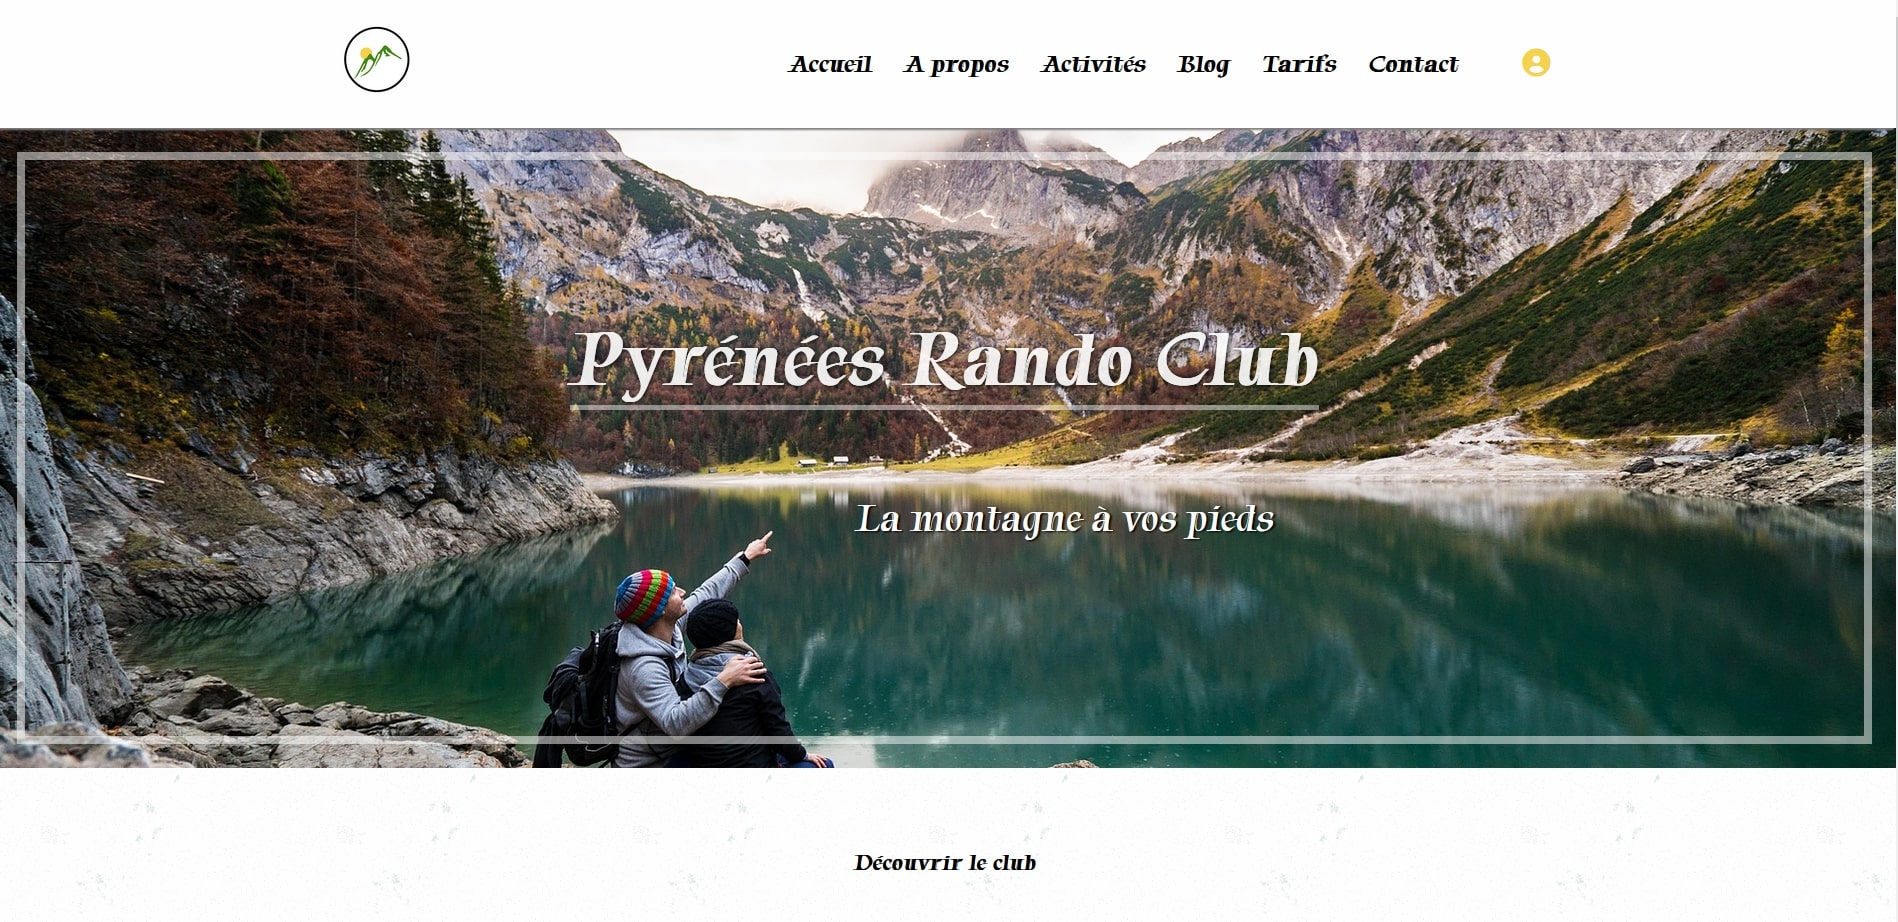 pyrenees rando club header